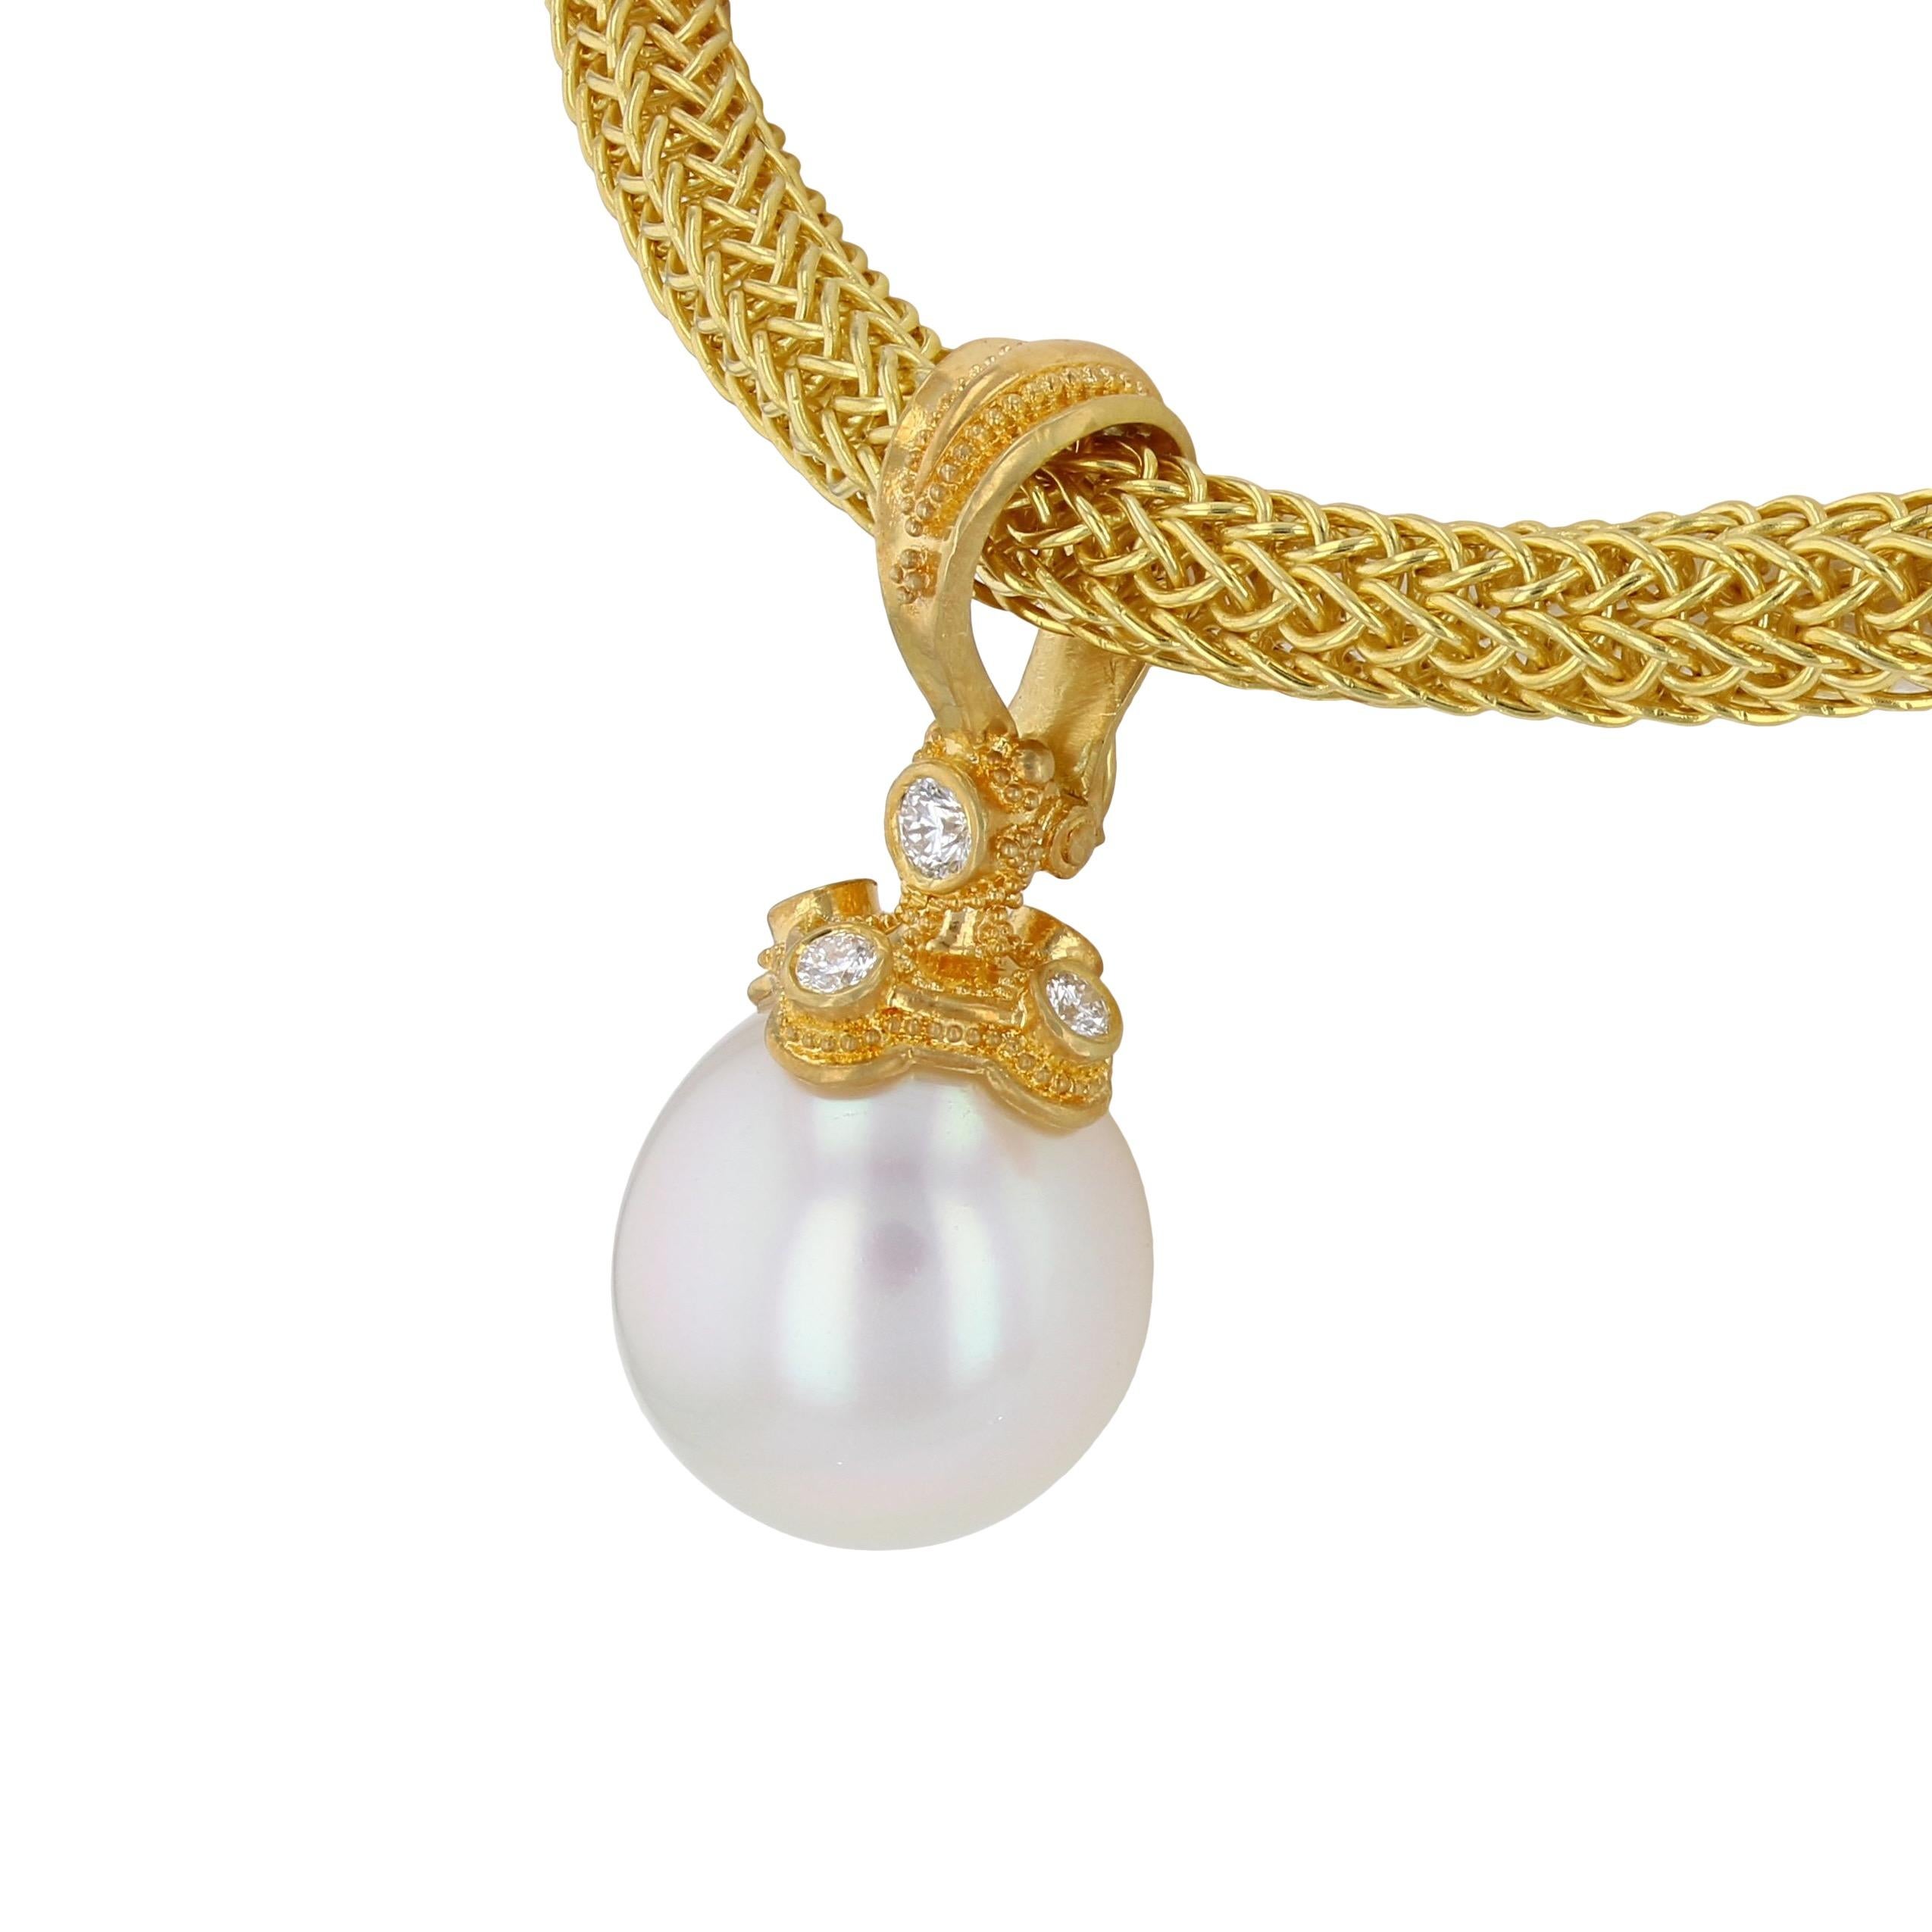 Artisan Kent Raible 18 Karat Gold White South Sea Pearl Pendant with Fine Granulation